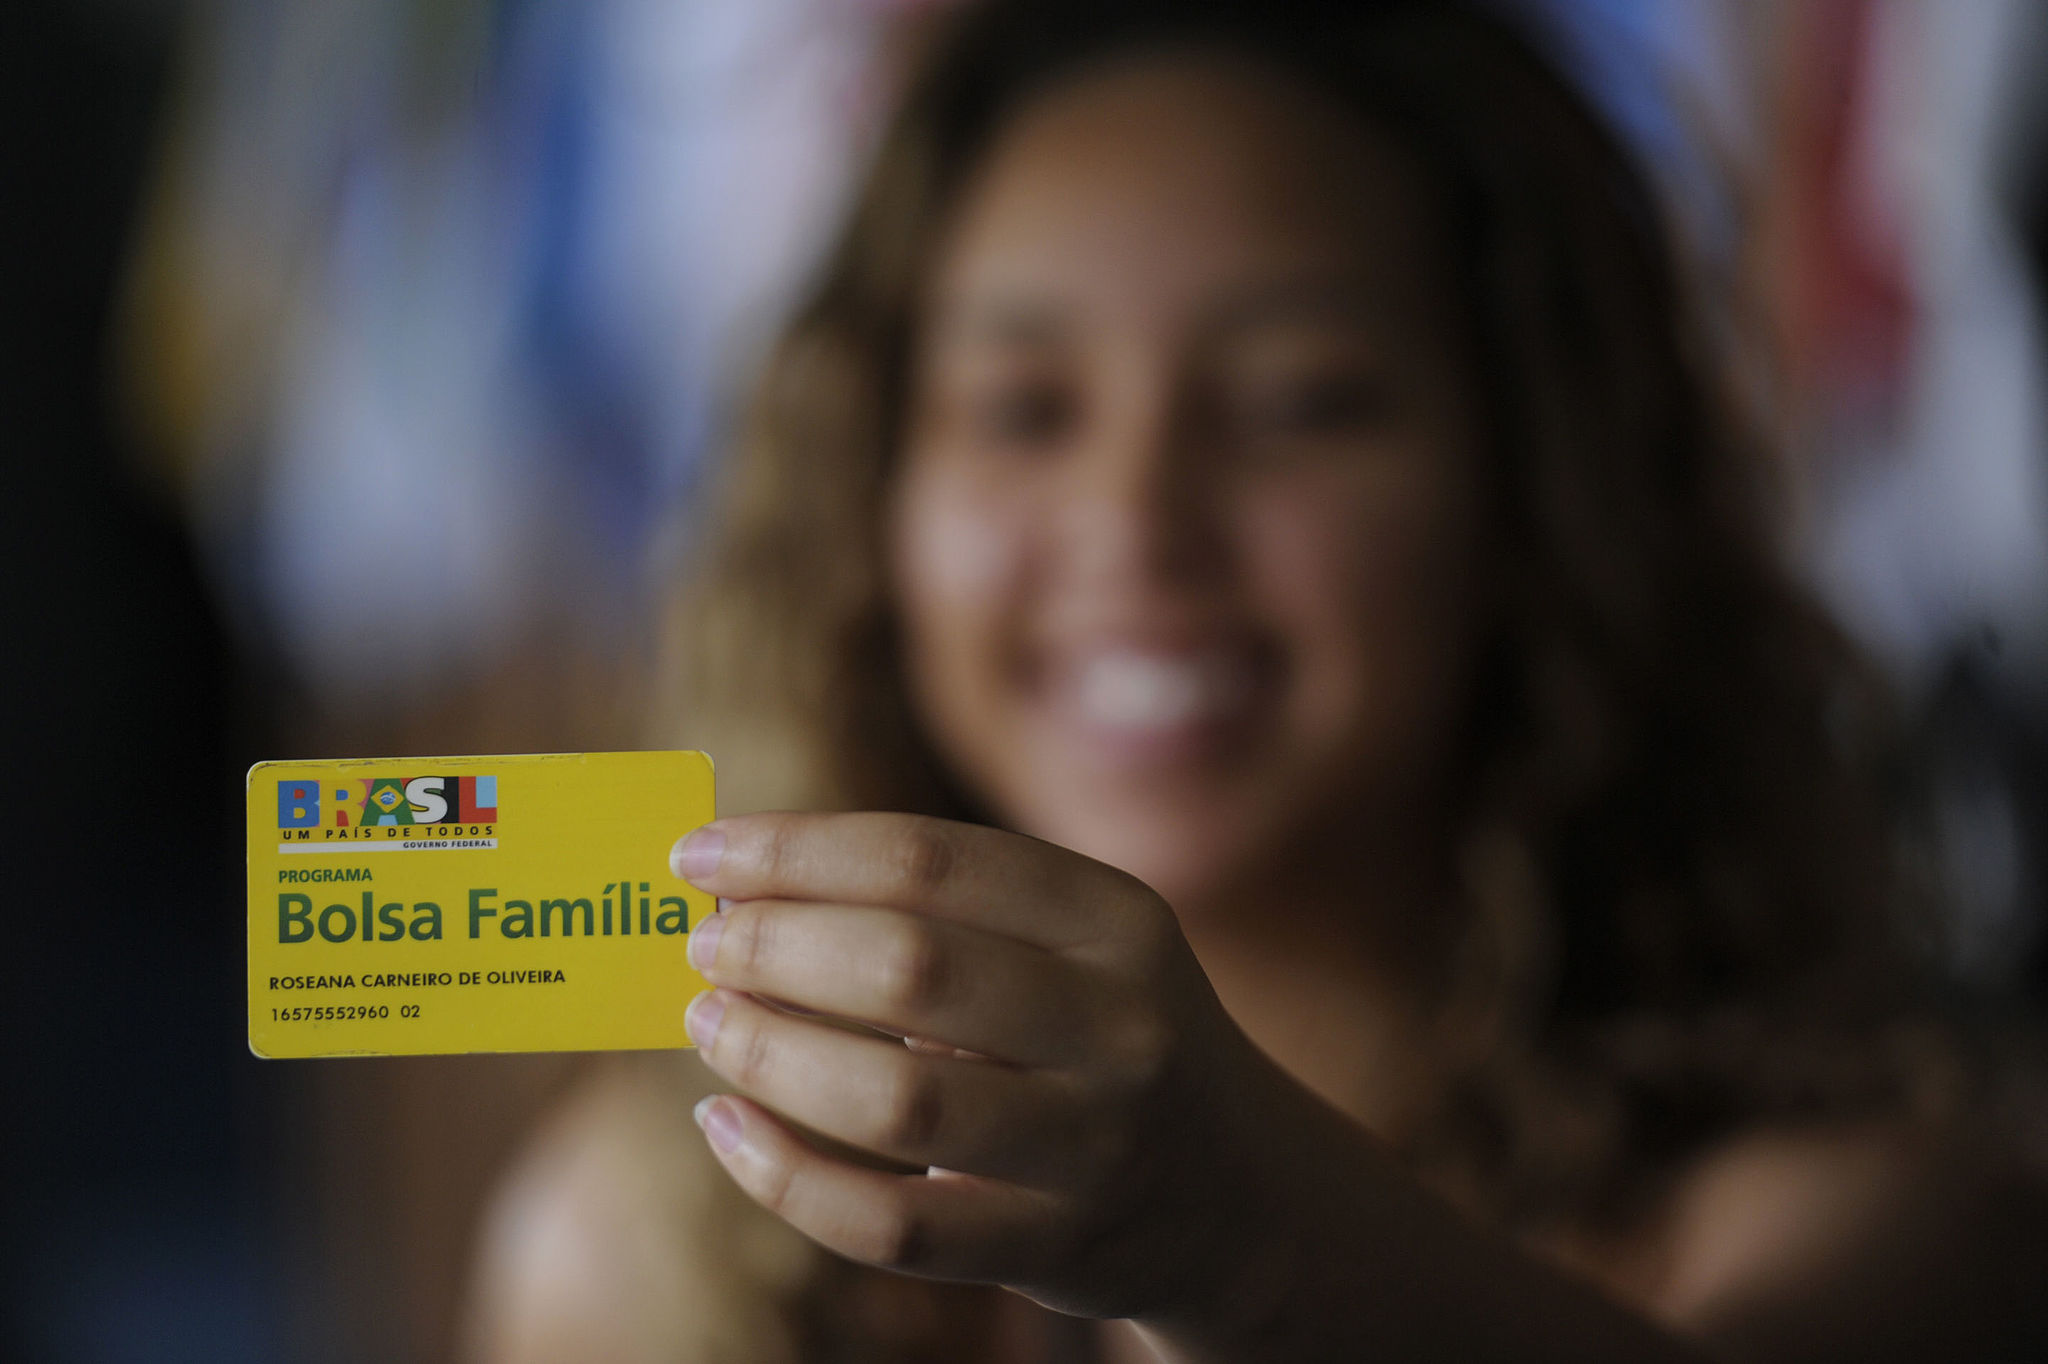 Brazil news, Bolsa Familia, welfare program